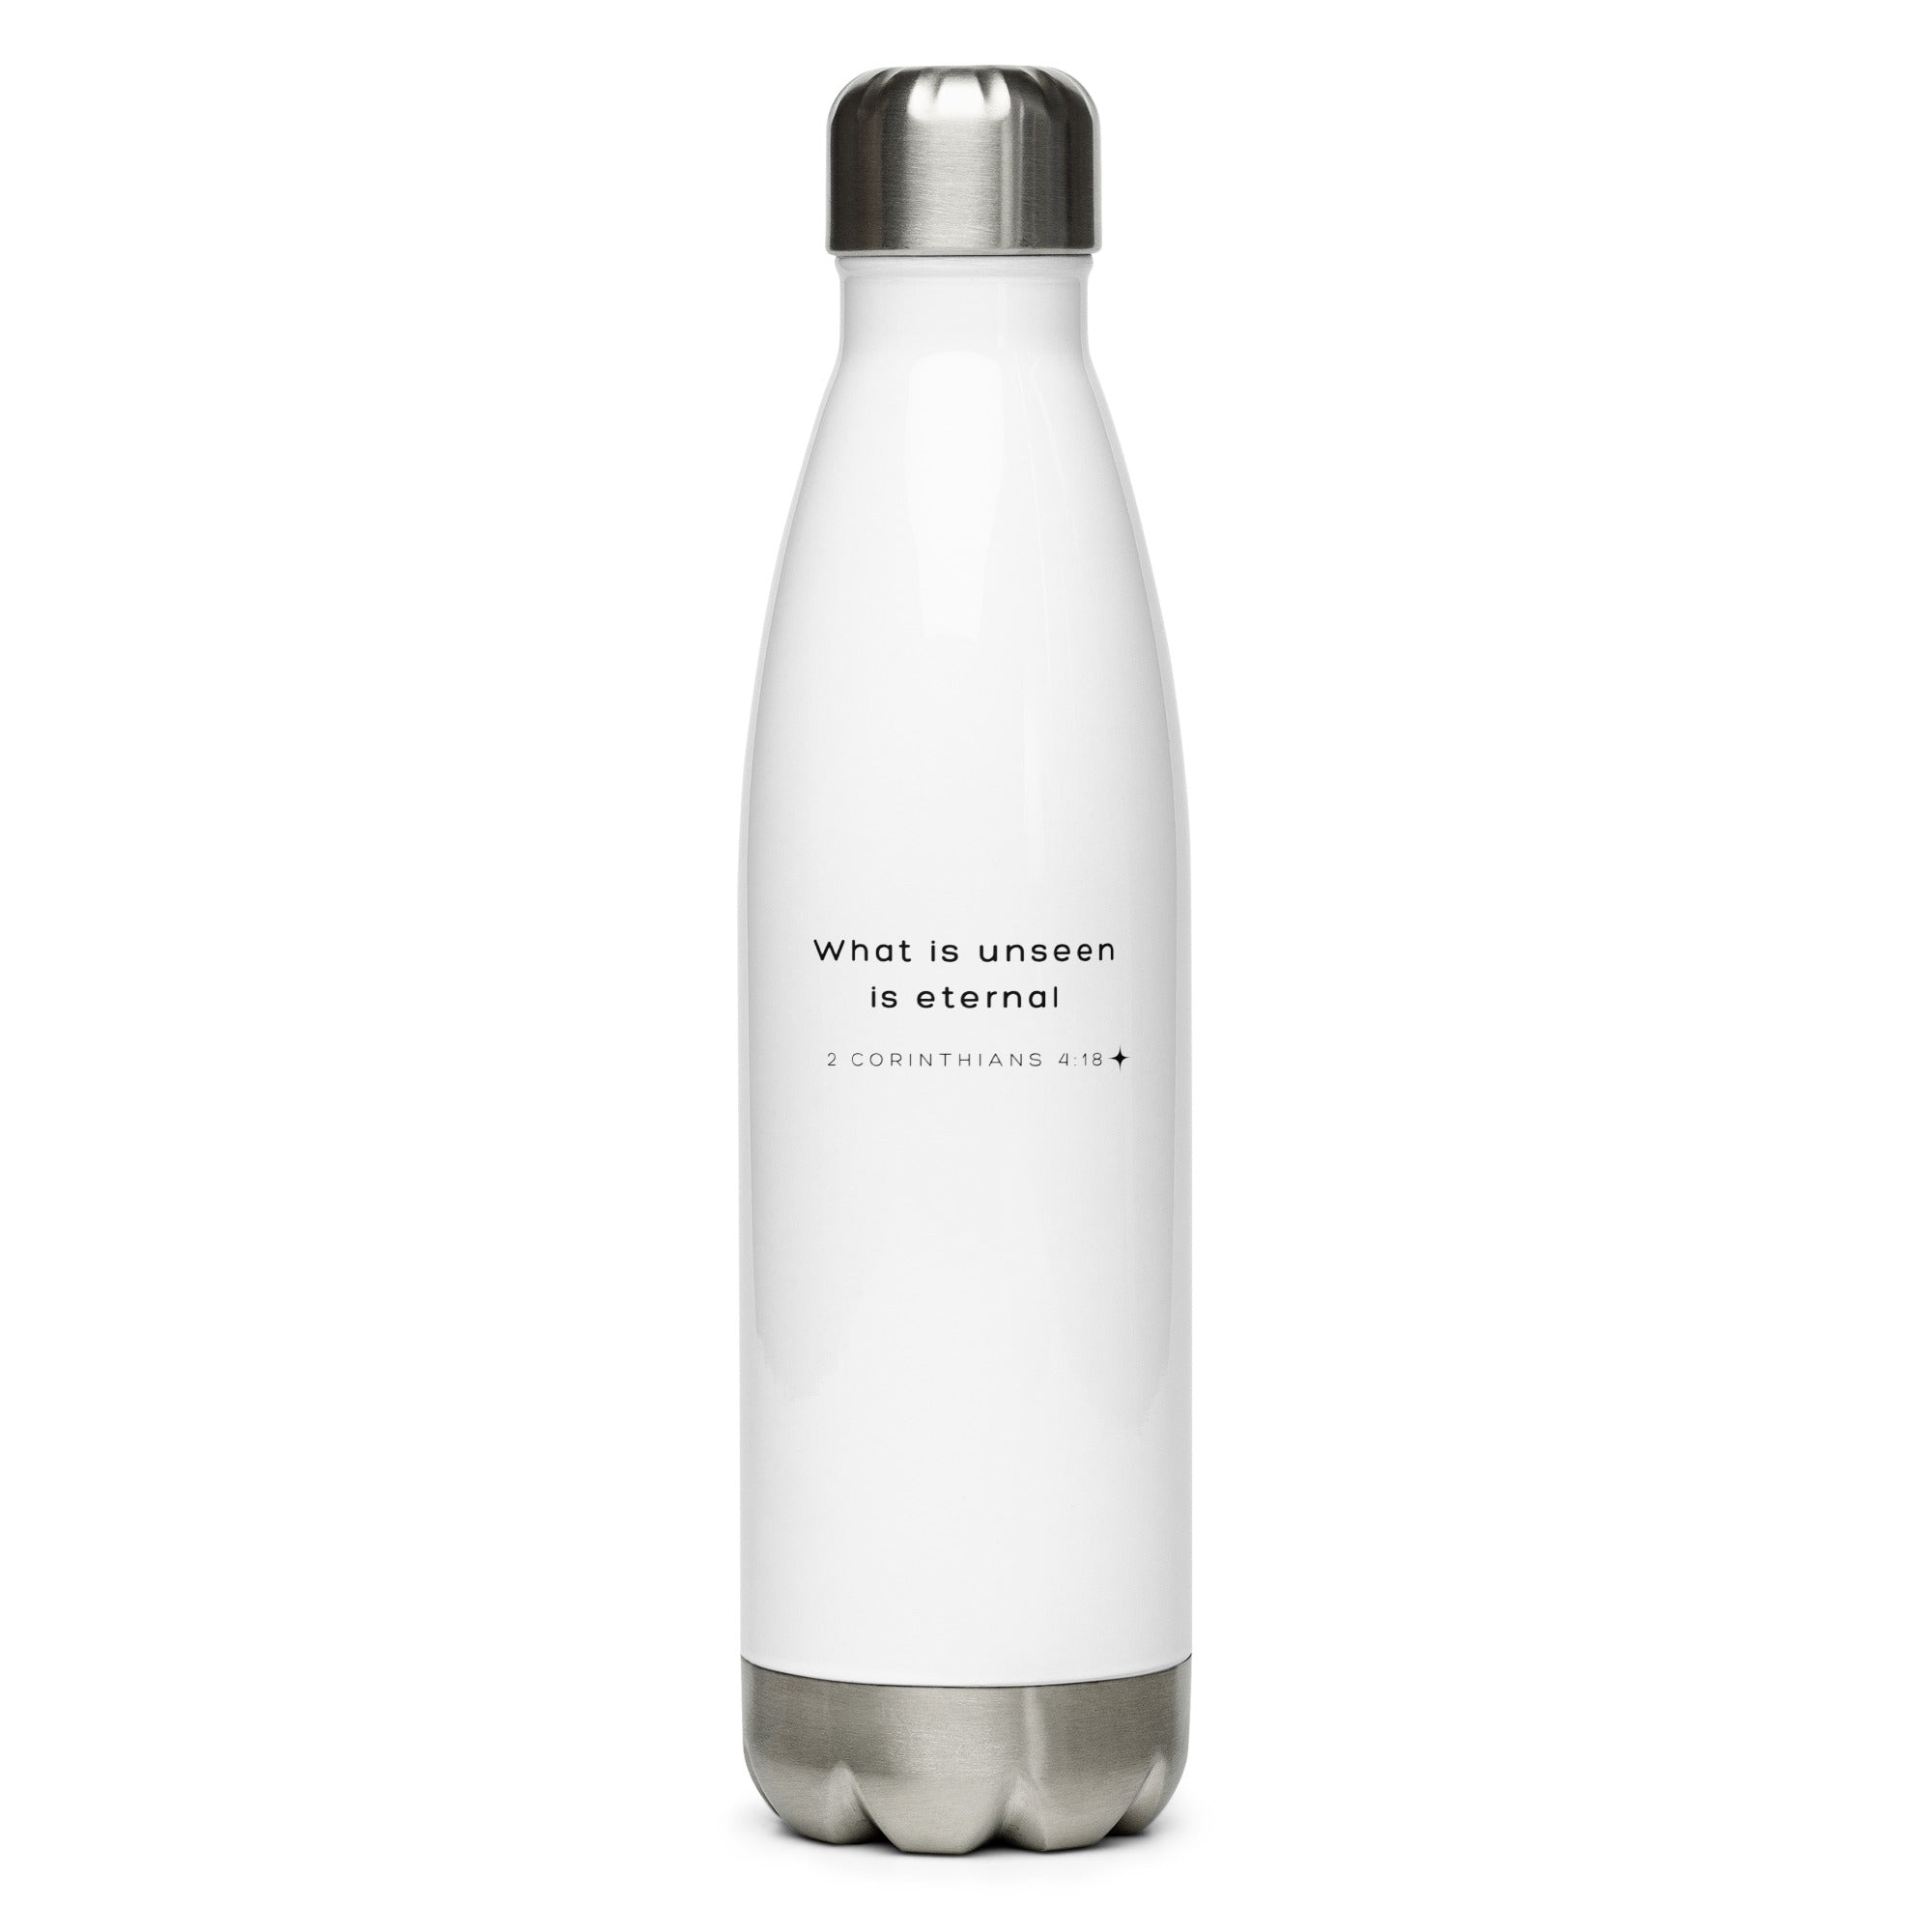 Stainless steel water bottle - 2 Corinthians 4:18